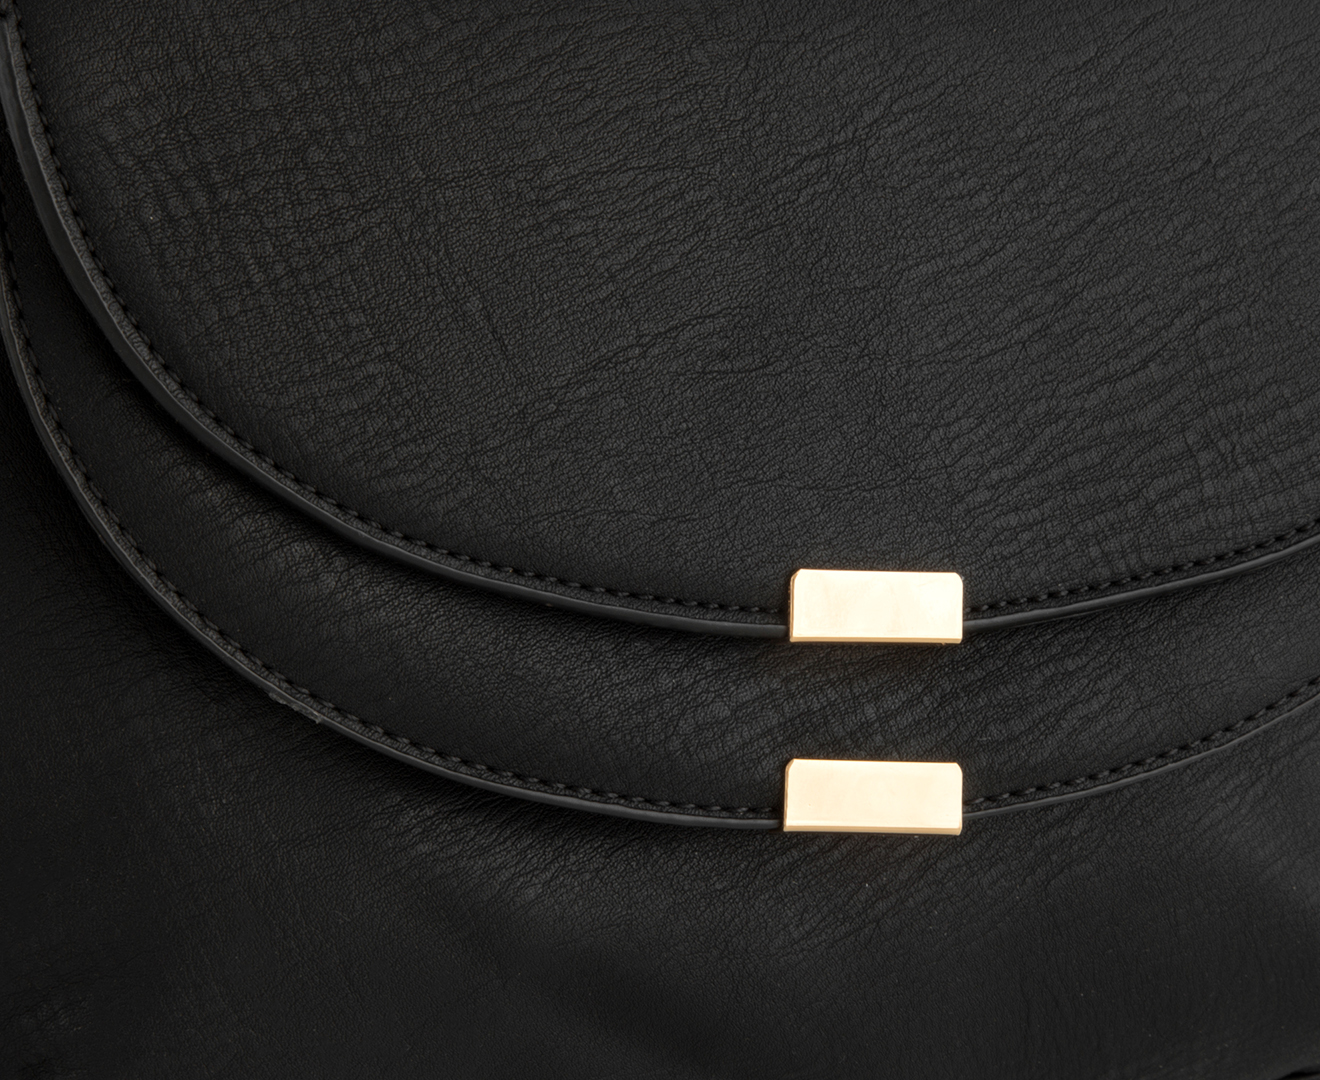 Tony Bianco Iconic Shoulder Bag - Black | Catch.co.nz